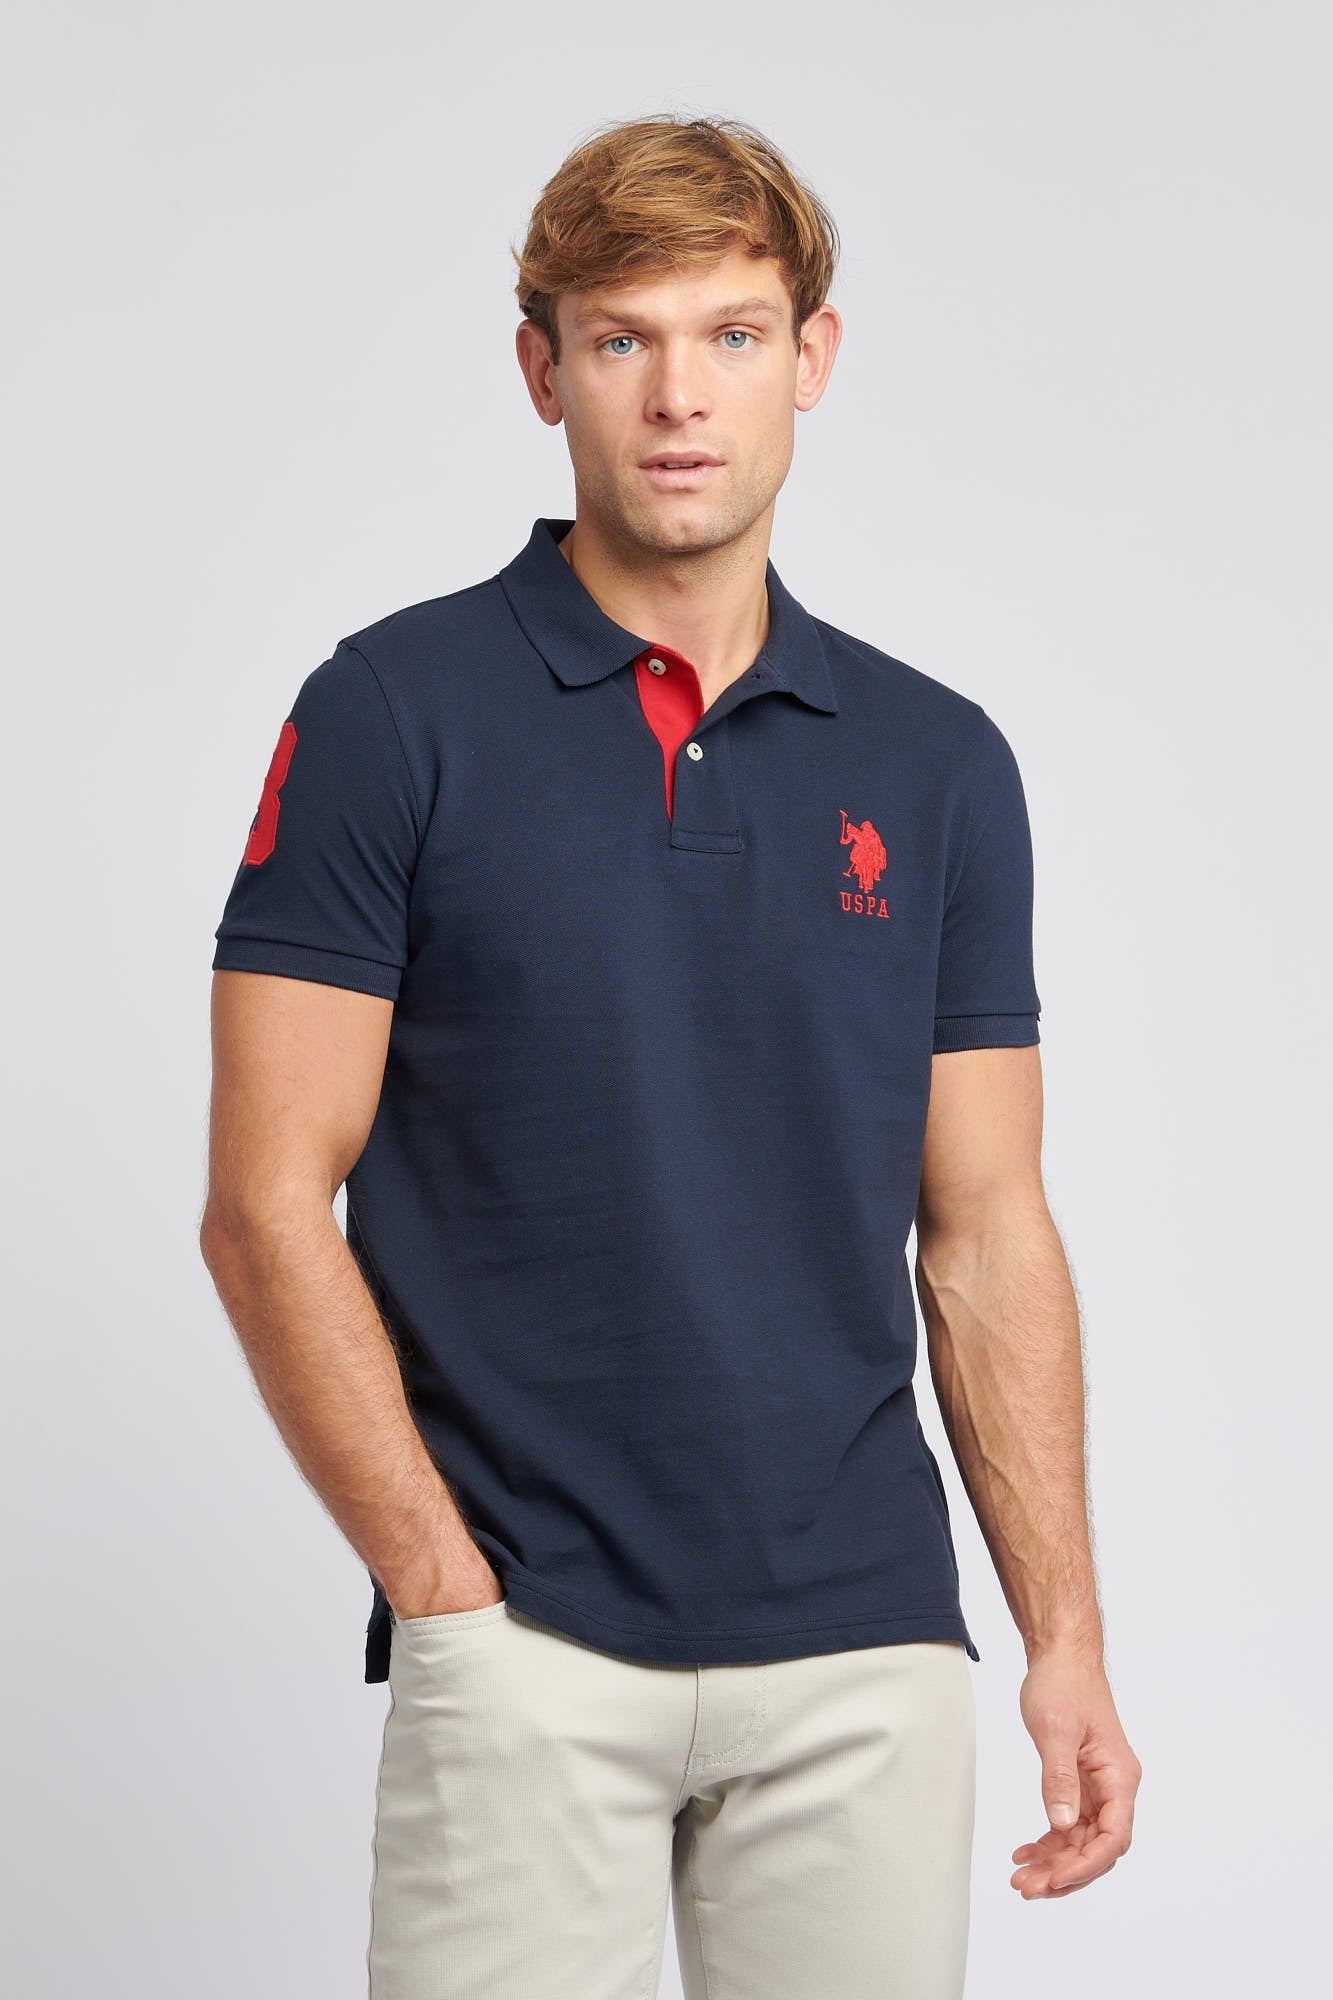 U.S. Polo Assn. Mens Player 3 Pique Polo Shirt in Dark Sapphire Navy / Haute Red DHM